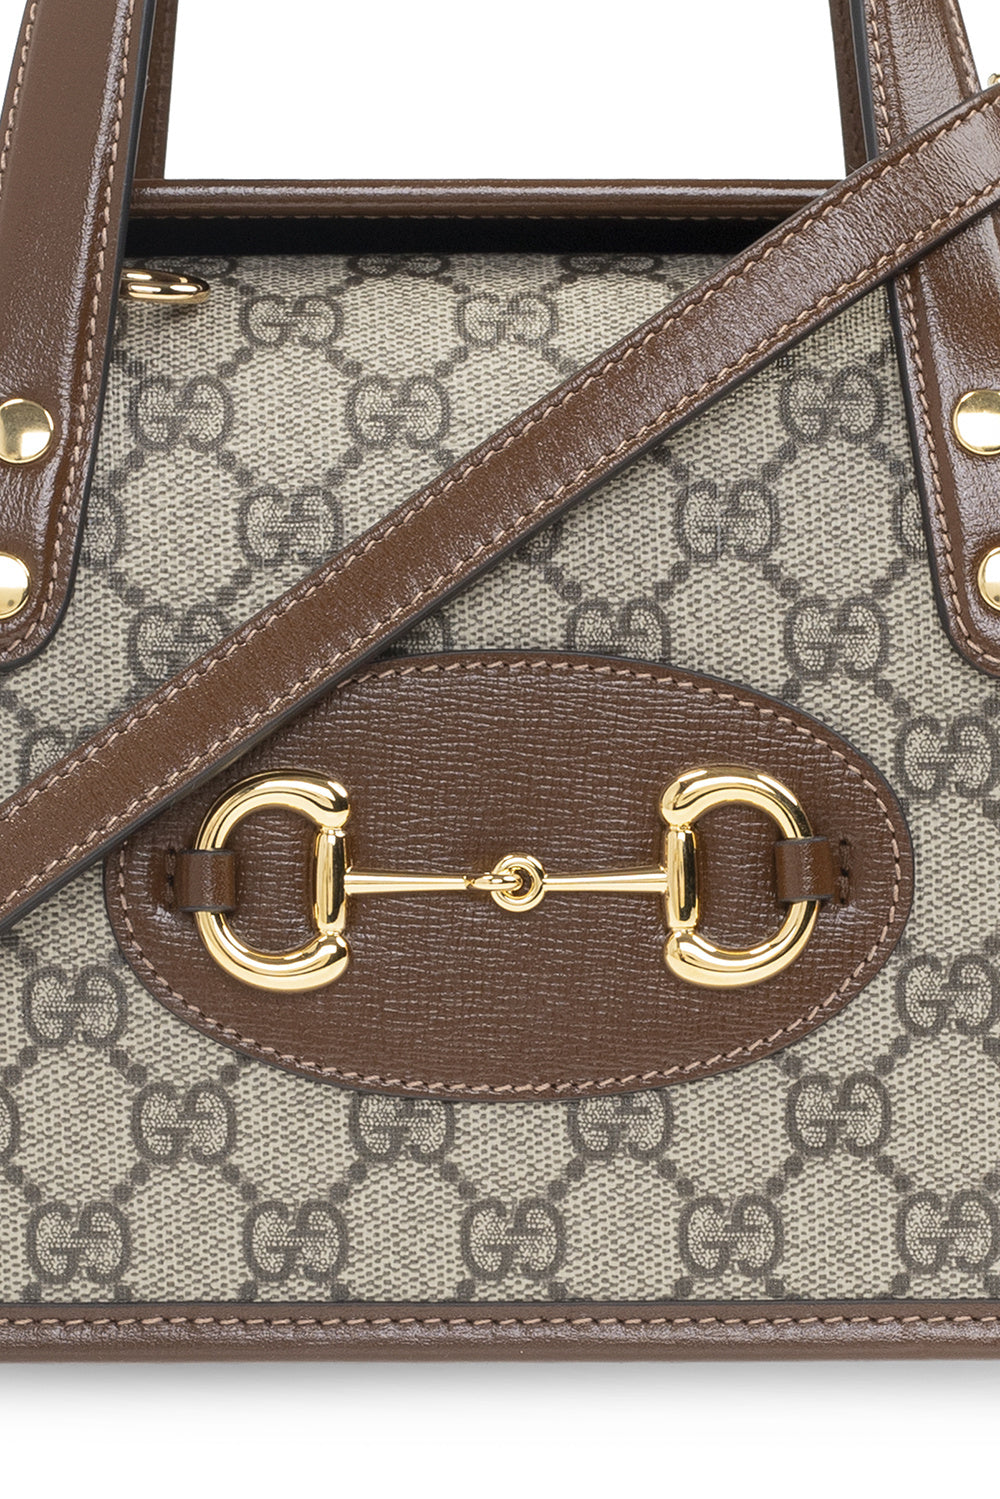 Gucci Horsebit 1955 Mini Top Handle Bag In GG Supreme & Brown Leather